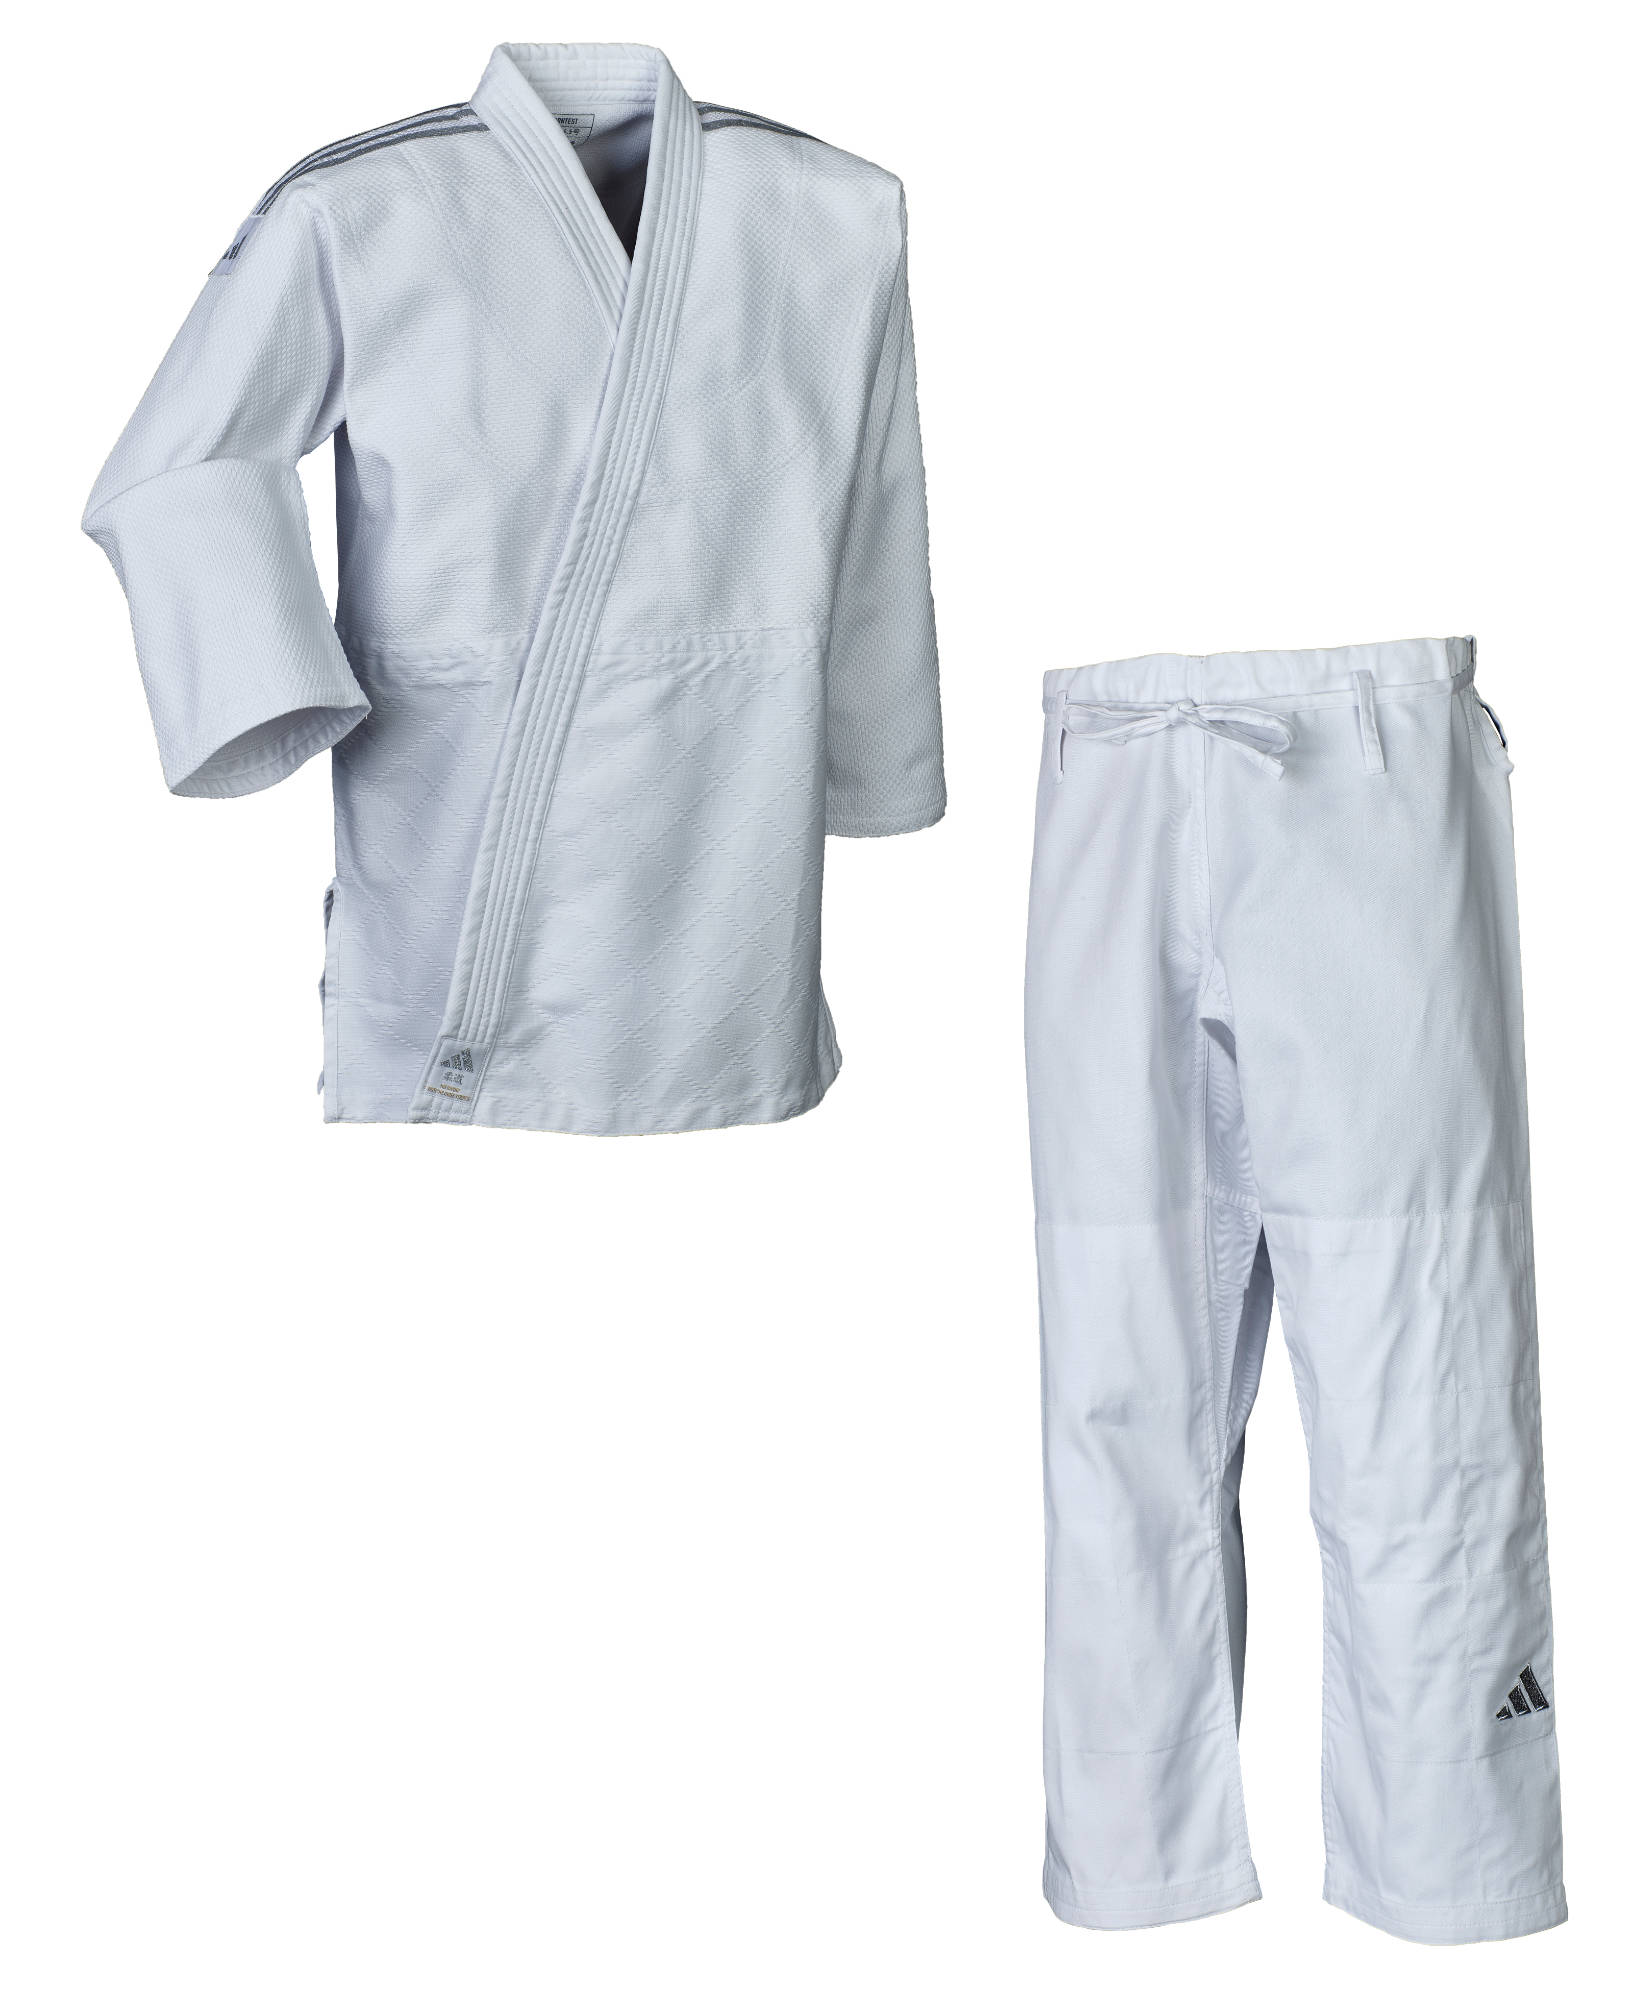 adidas Judo-Anzug Contest weiß/silberne Streifen, J650